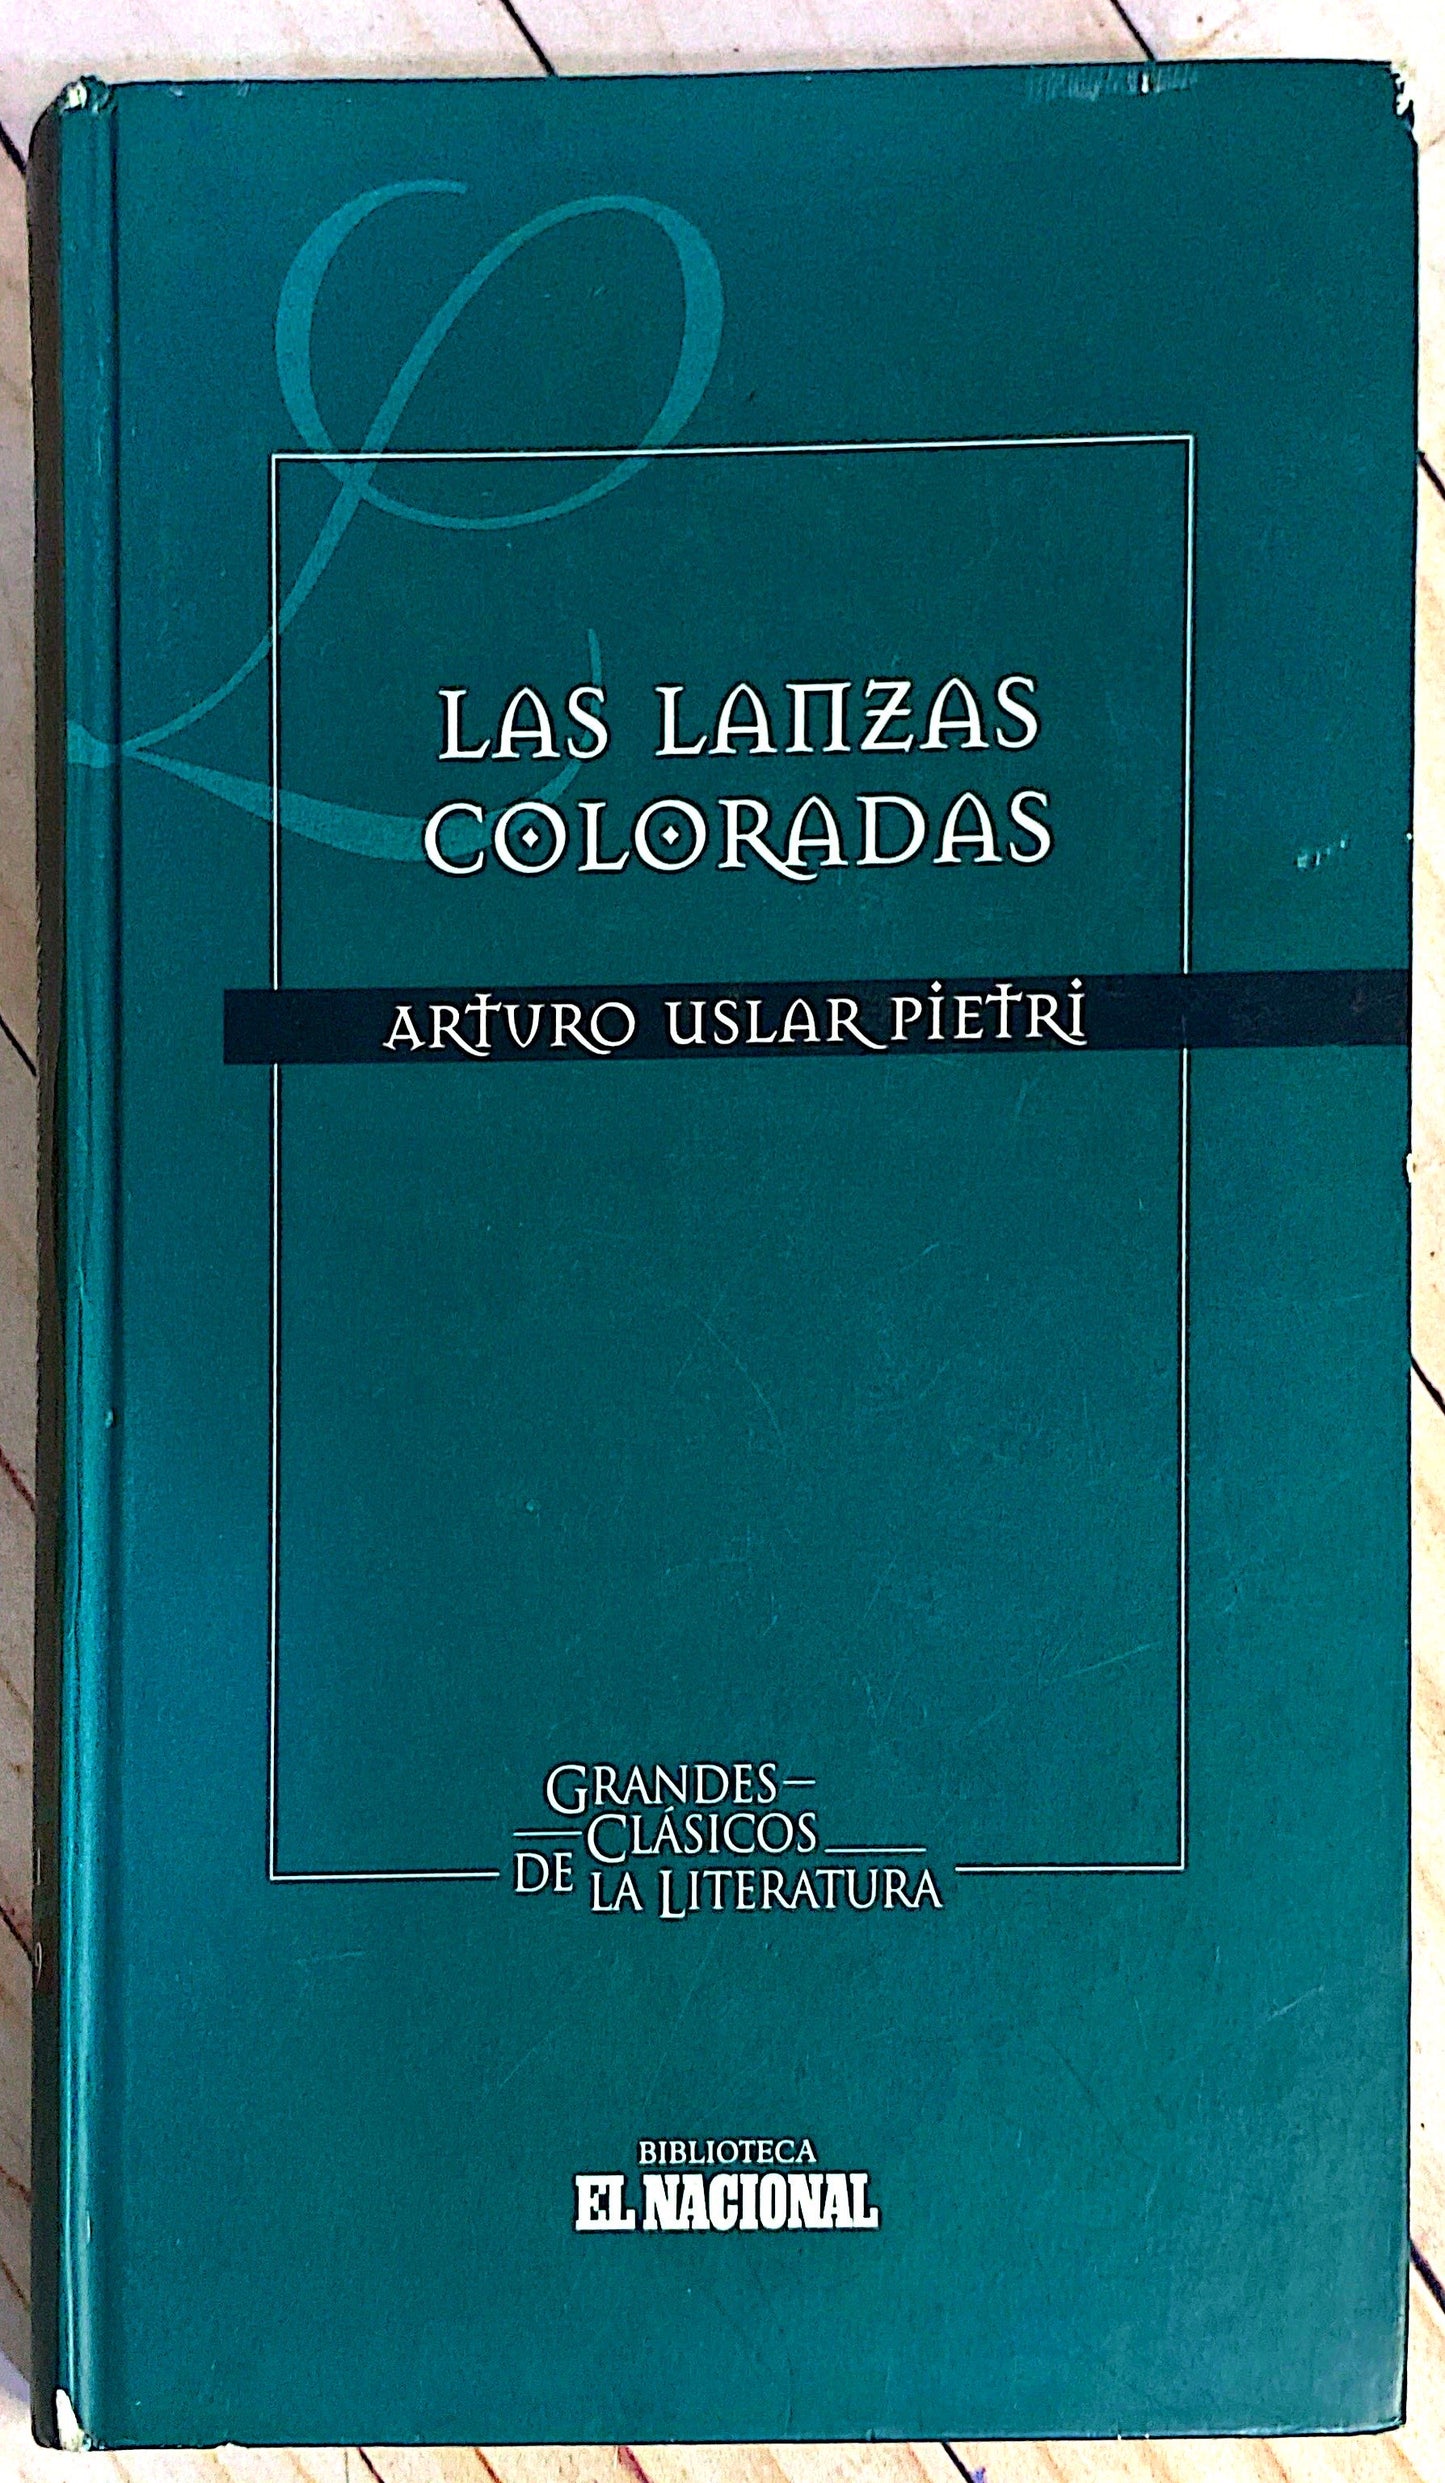 Las lanzas coloradas | Arturo Uslar Pietri